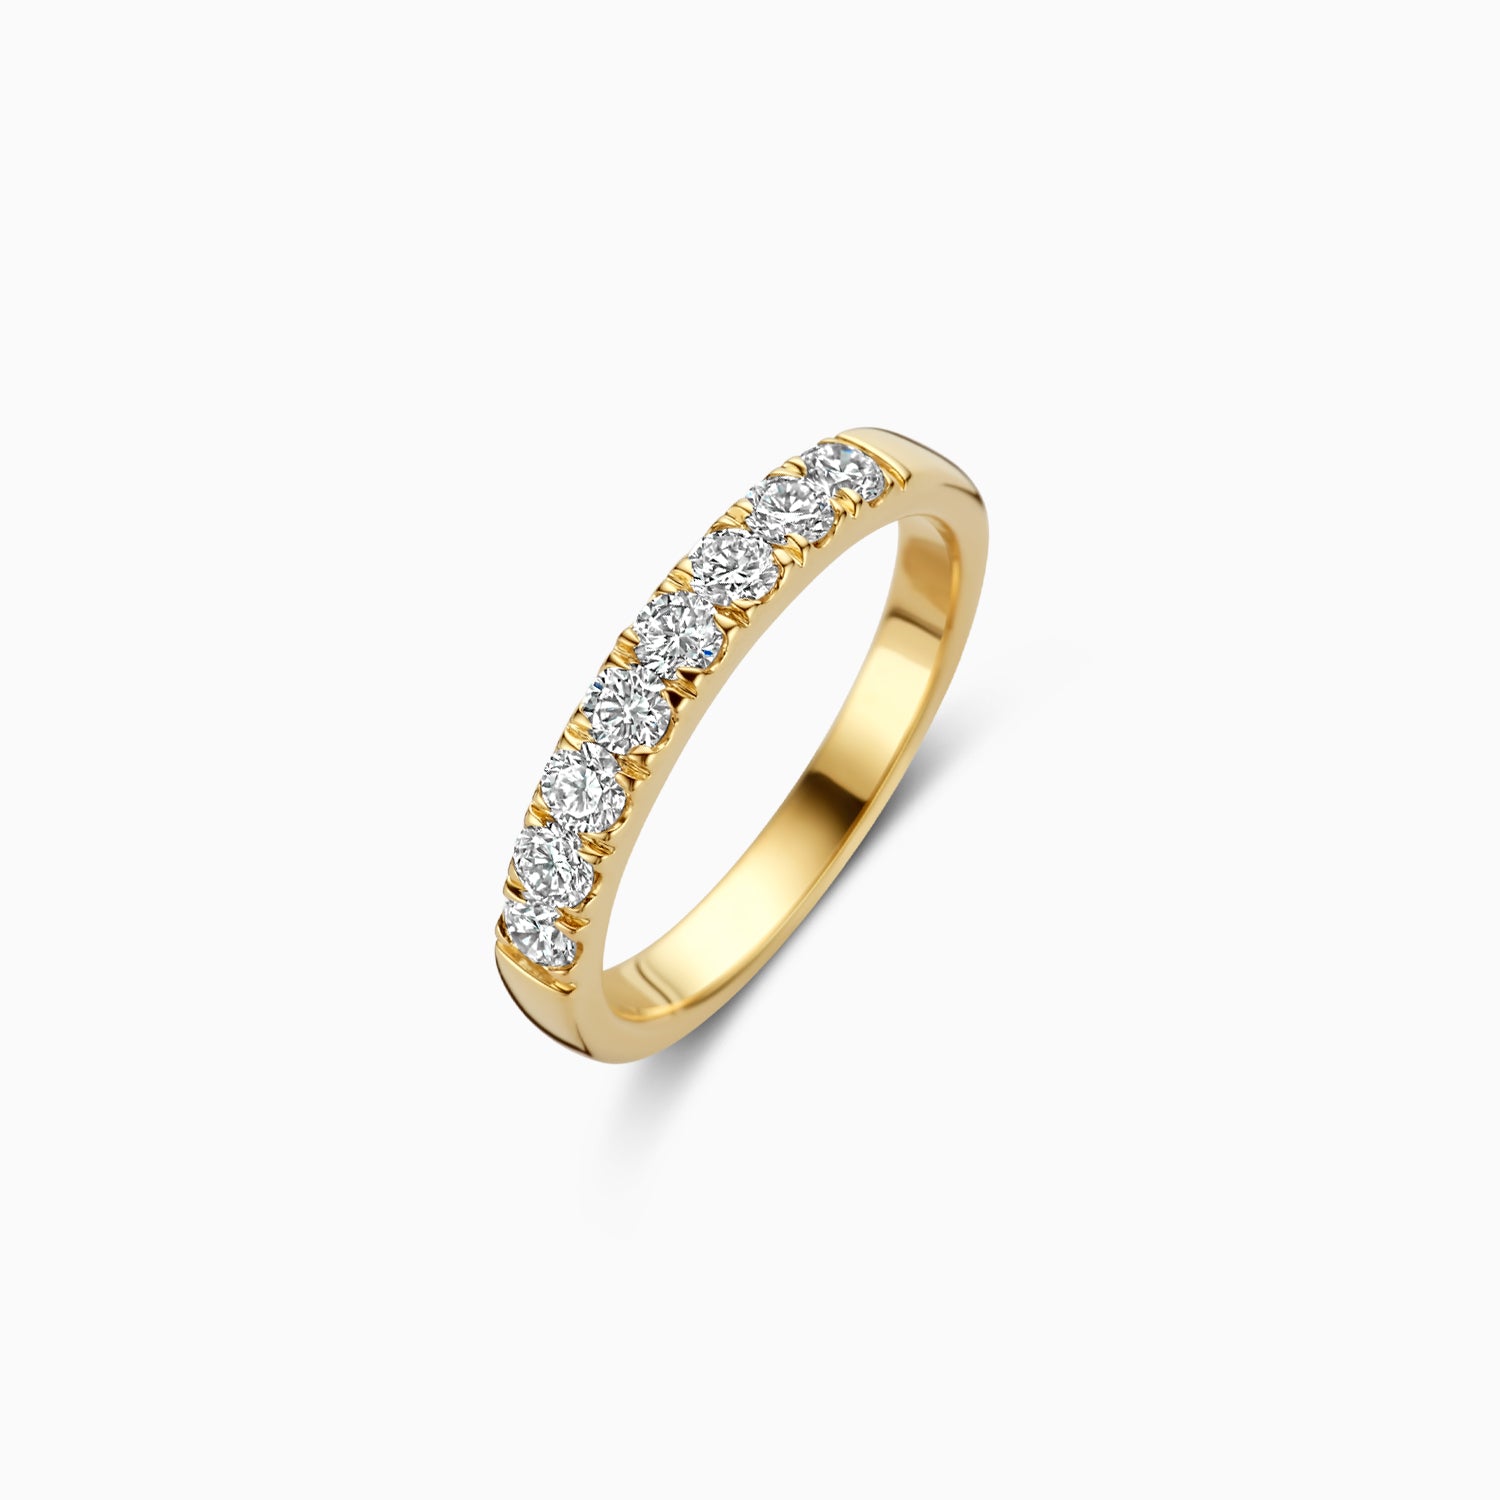 Lab diamonds Ringe LG1015Y - 585er Gelbgold